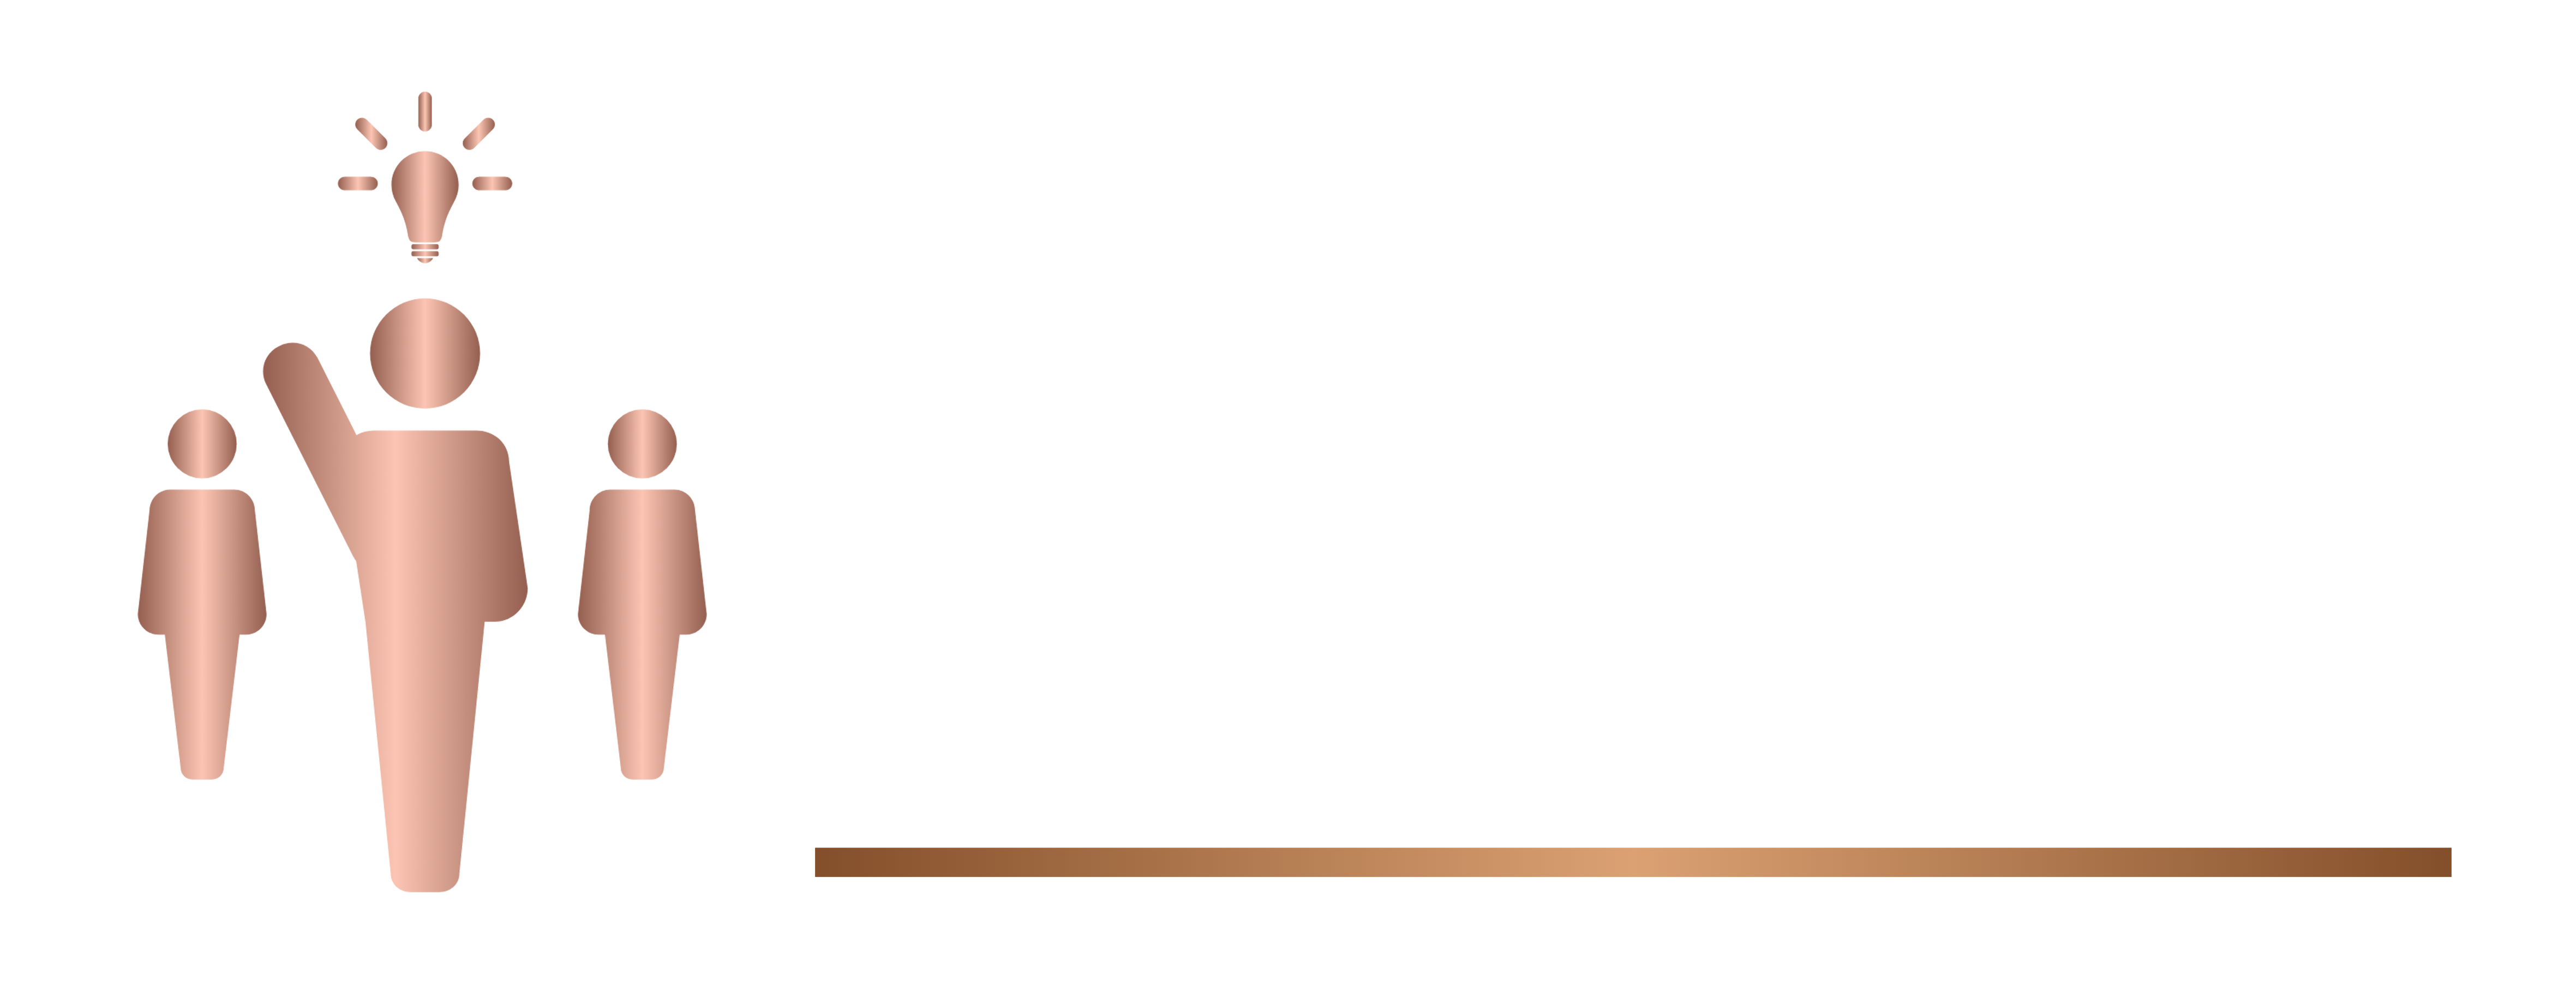 Prasad Counseling and Training LLC